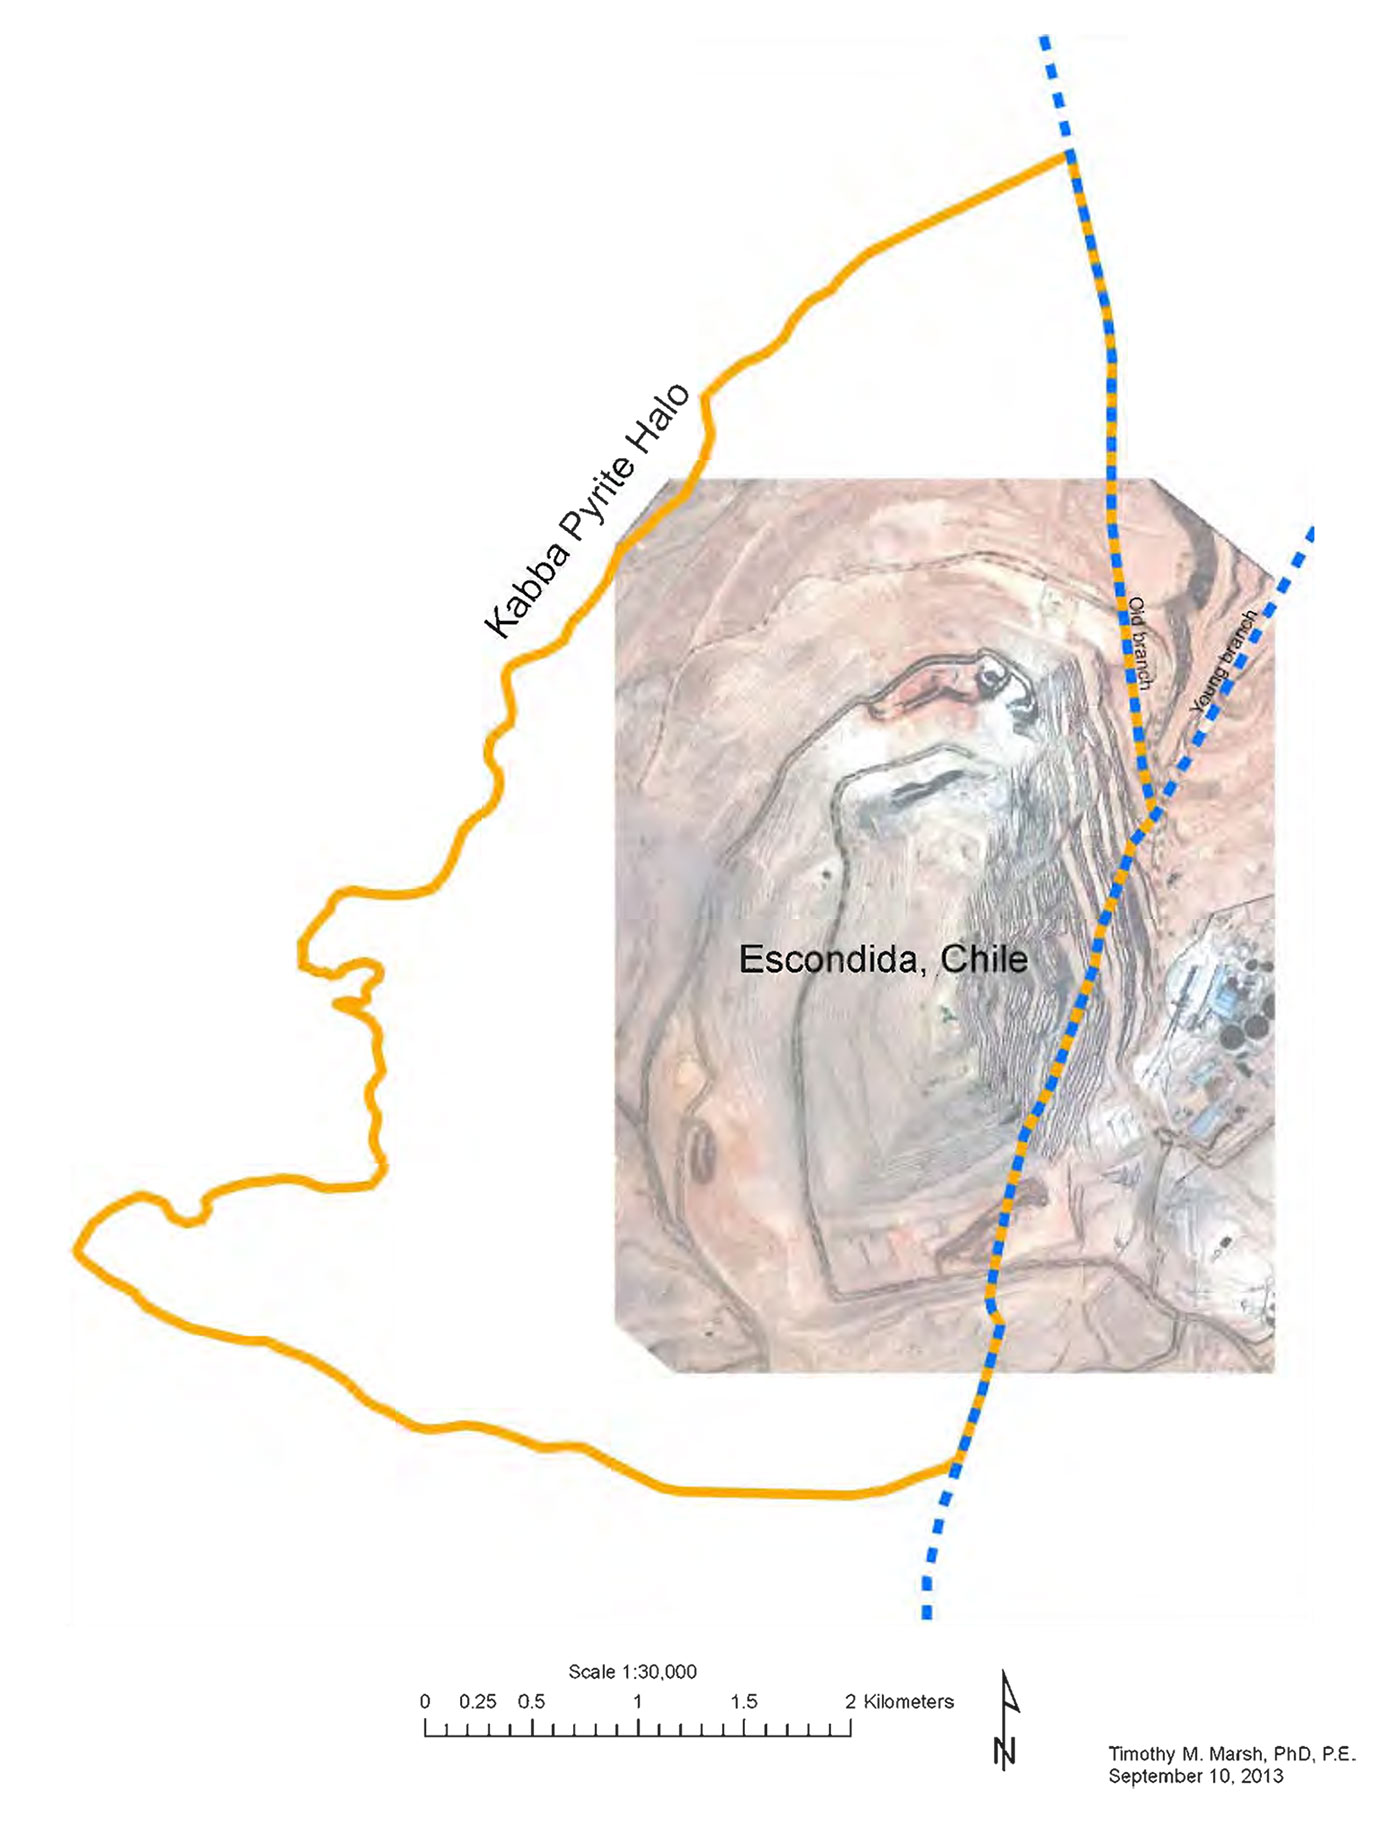 Kabba vs. Escondida (world’s largest copper mine)